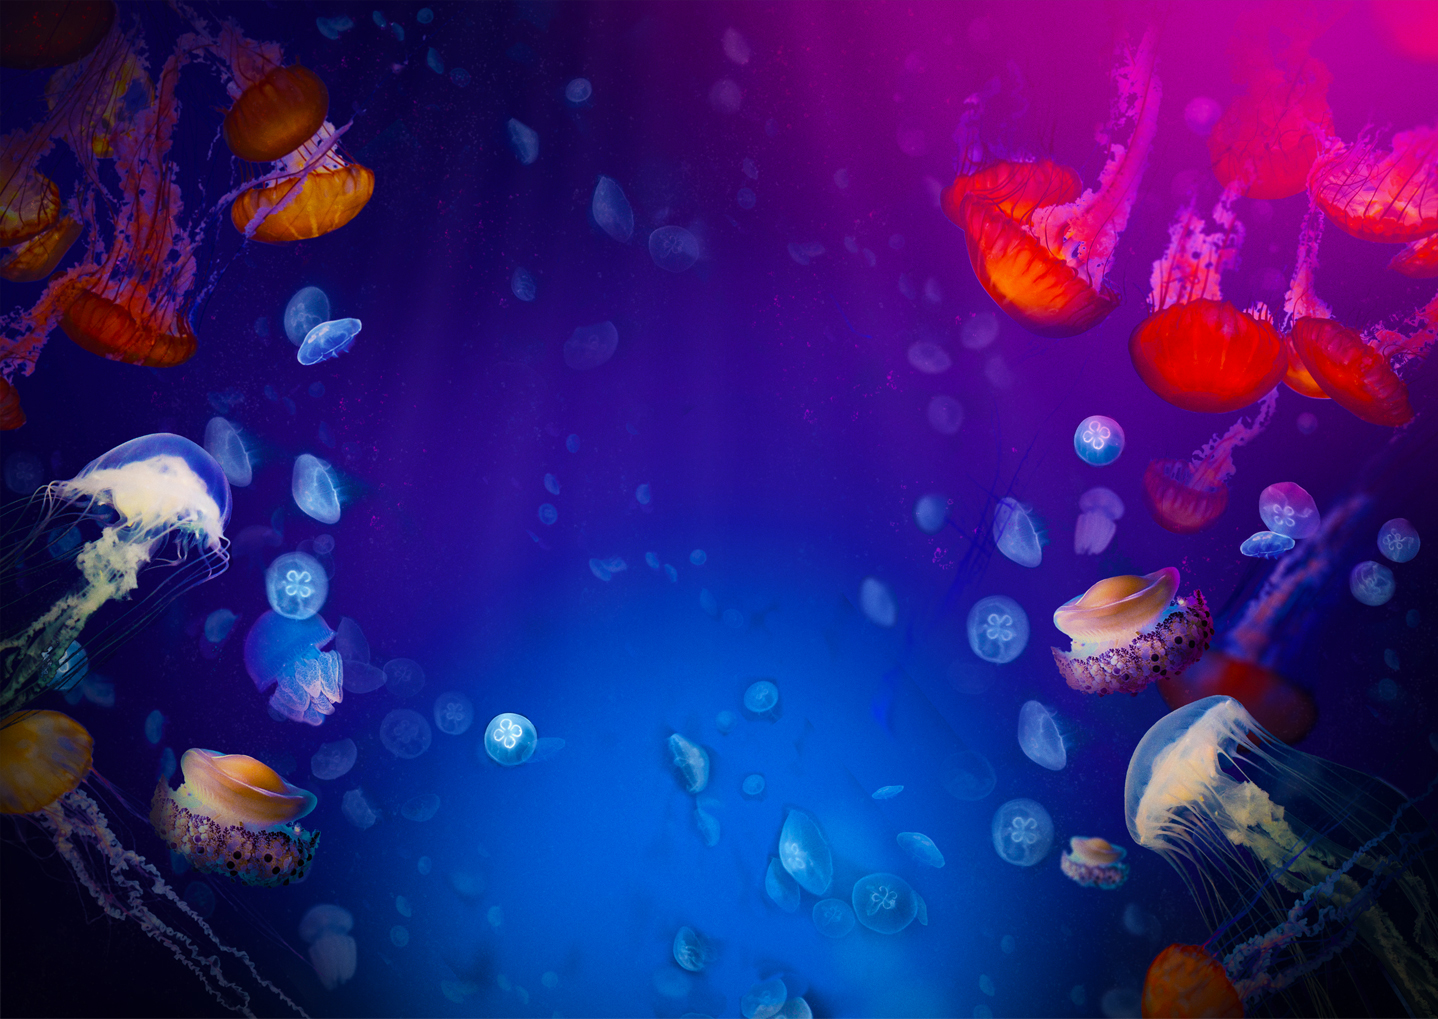 Jellyfish background image